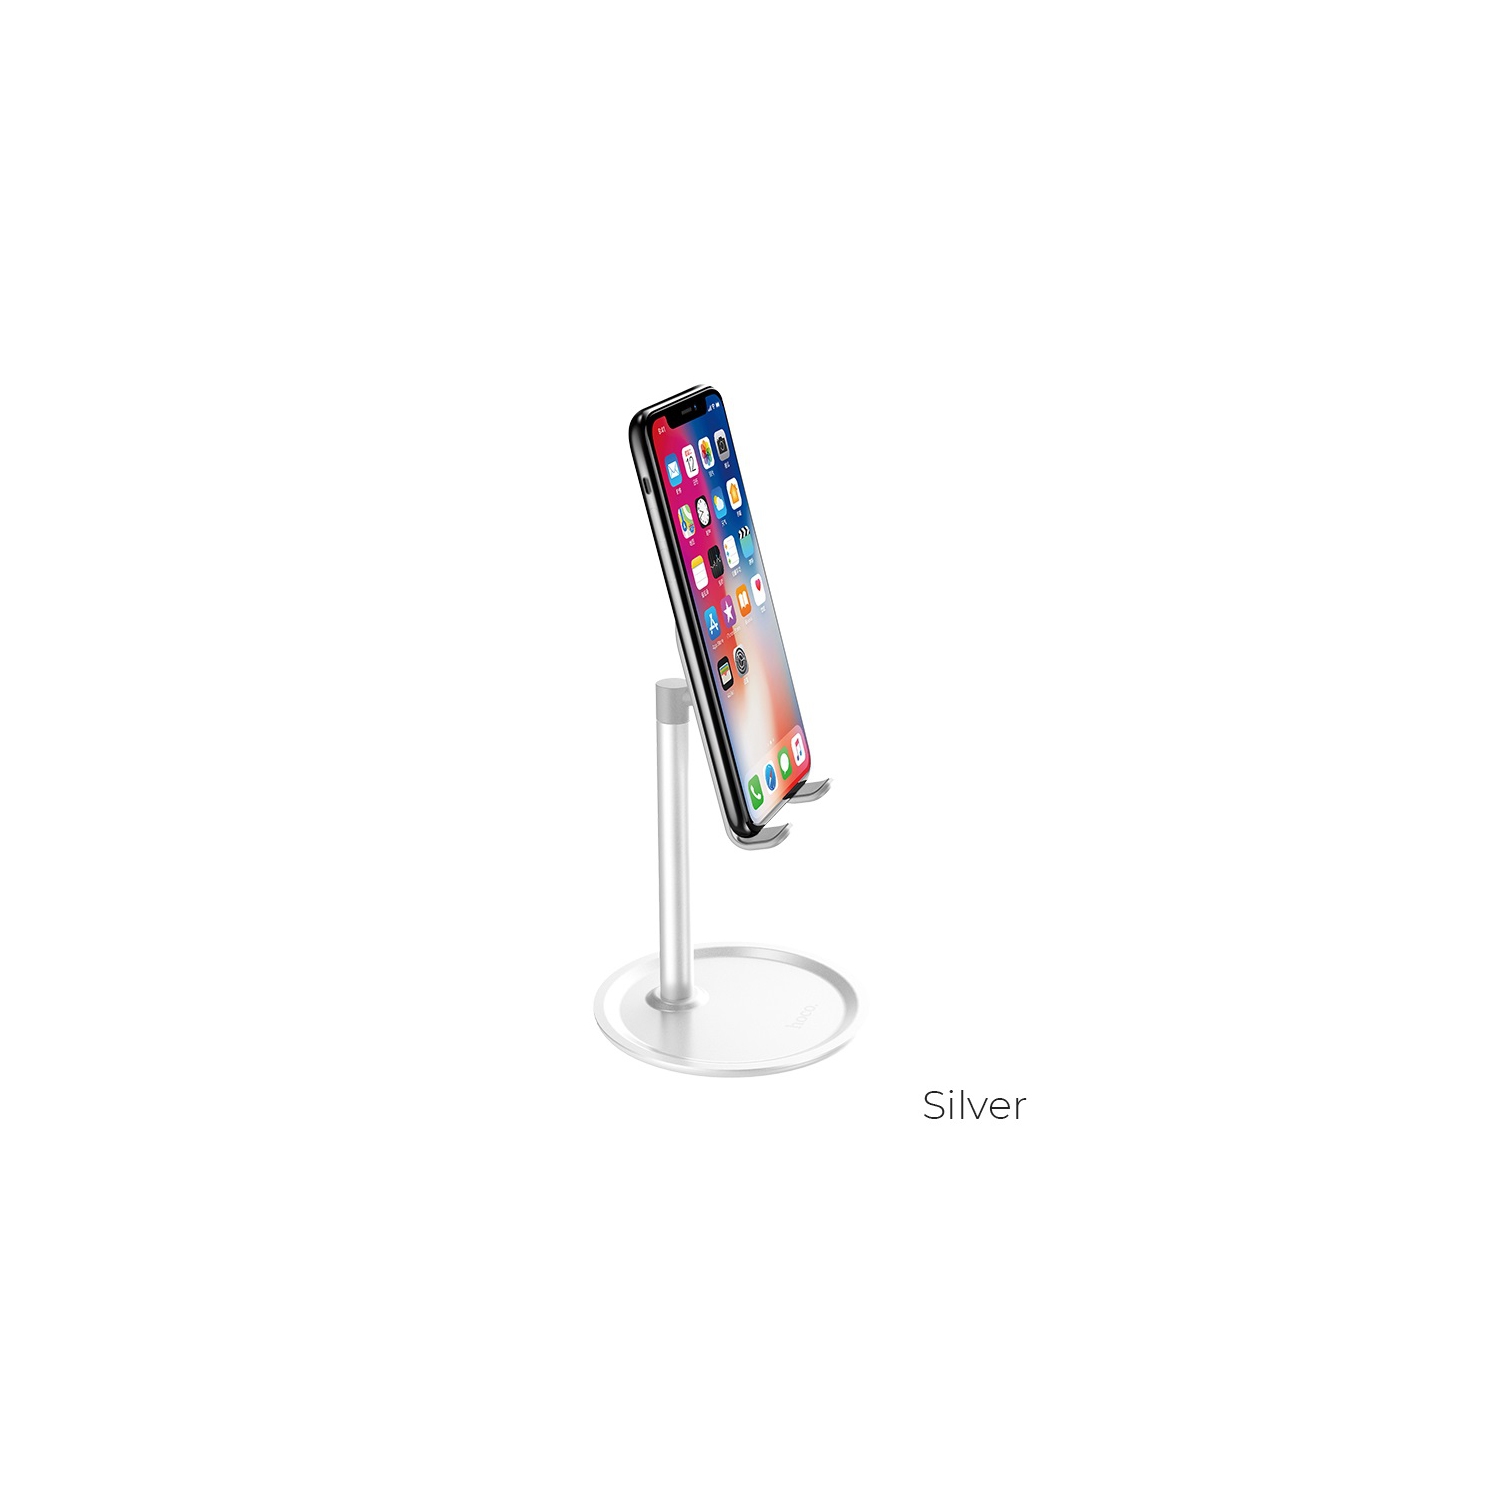 【CSmart】 Rotating Tablet Desk Stand Flexible Cellphone Mount Holder for iPhone / iPad / Samsung Tablet / Smartphone, Sliver